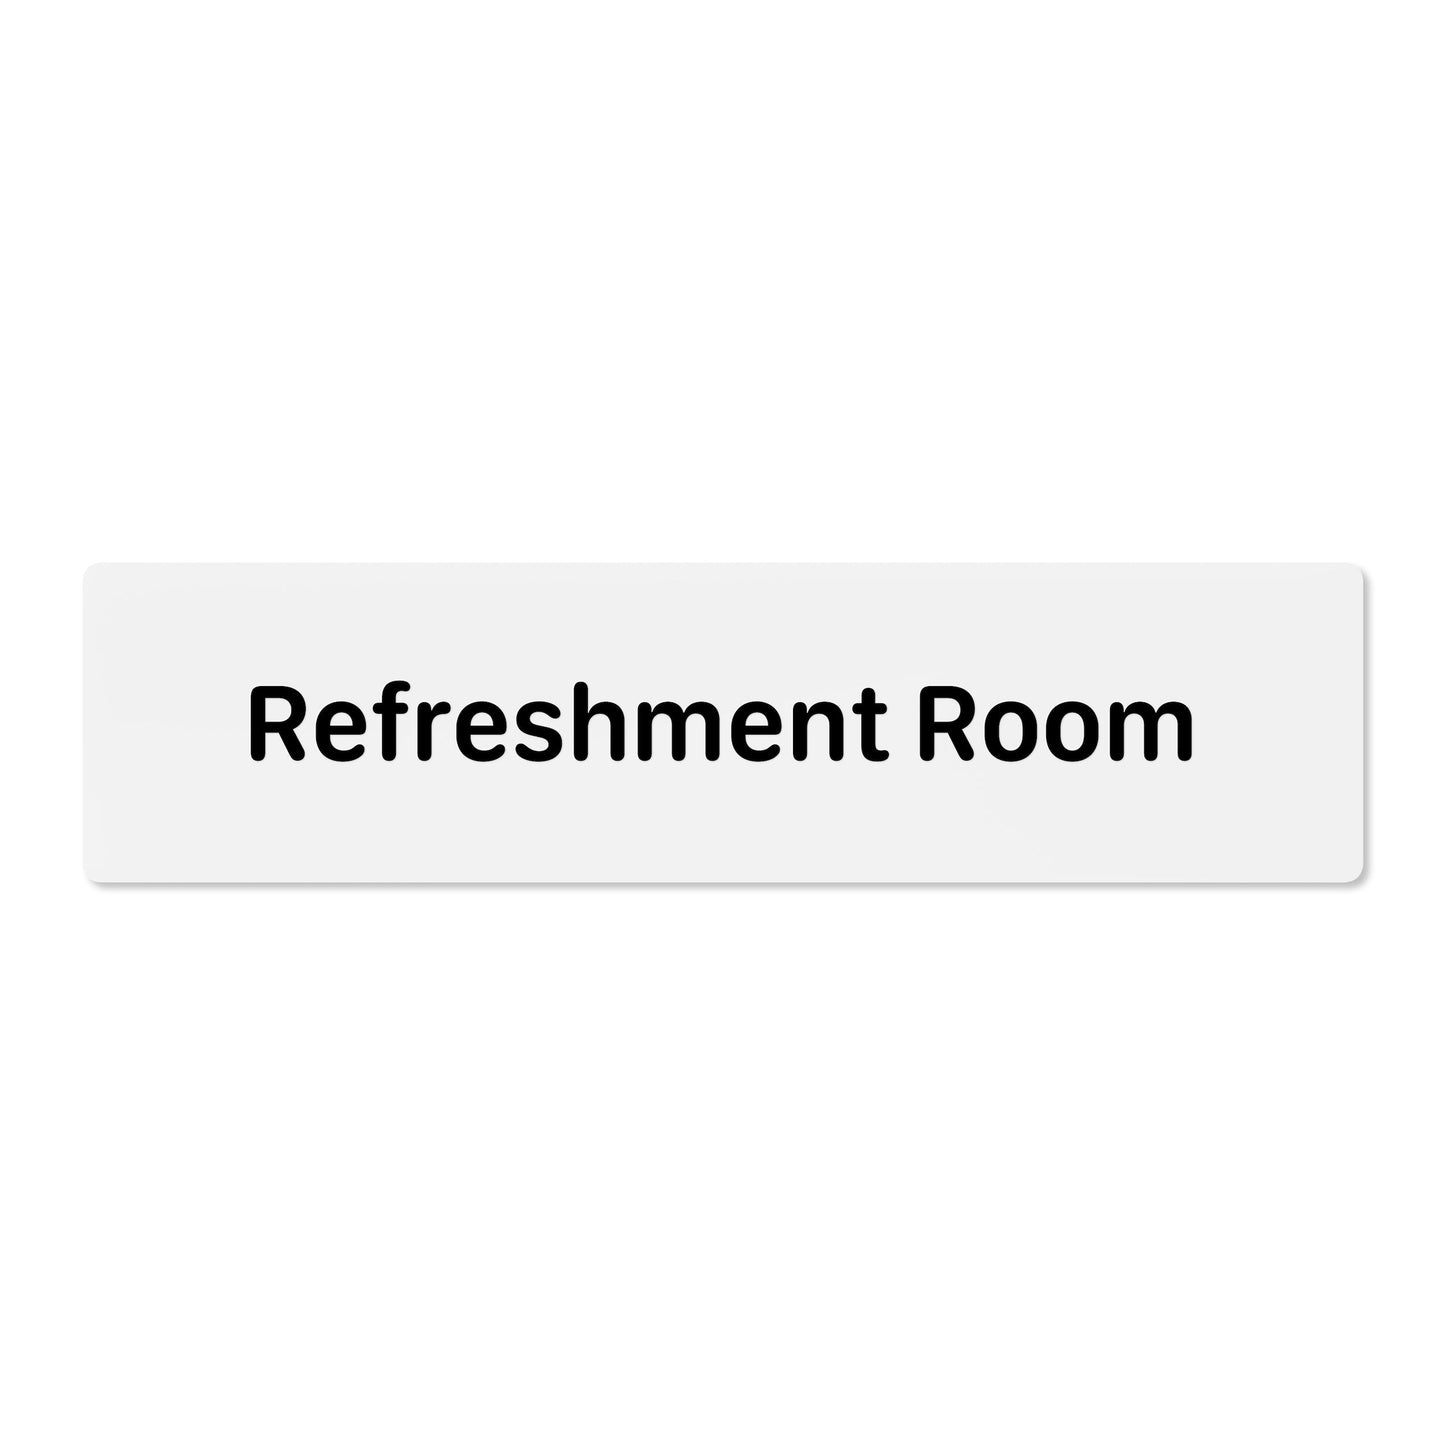 Refreshment Room